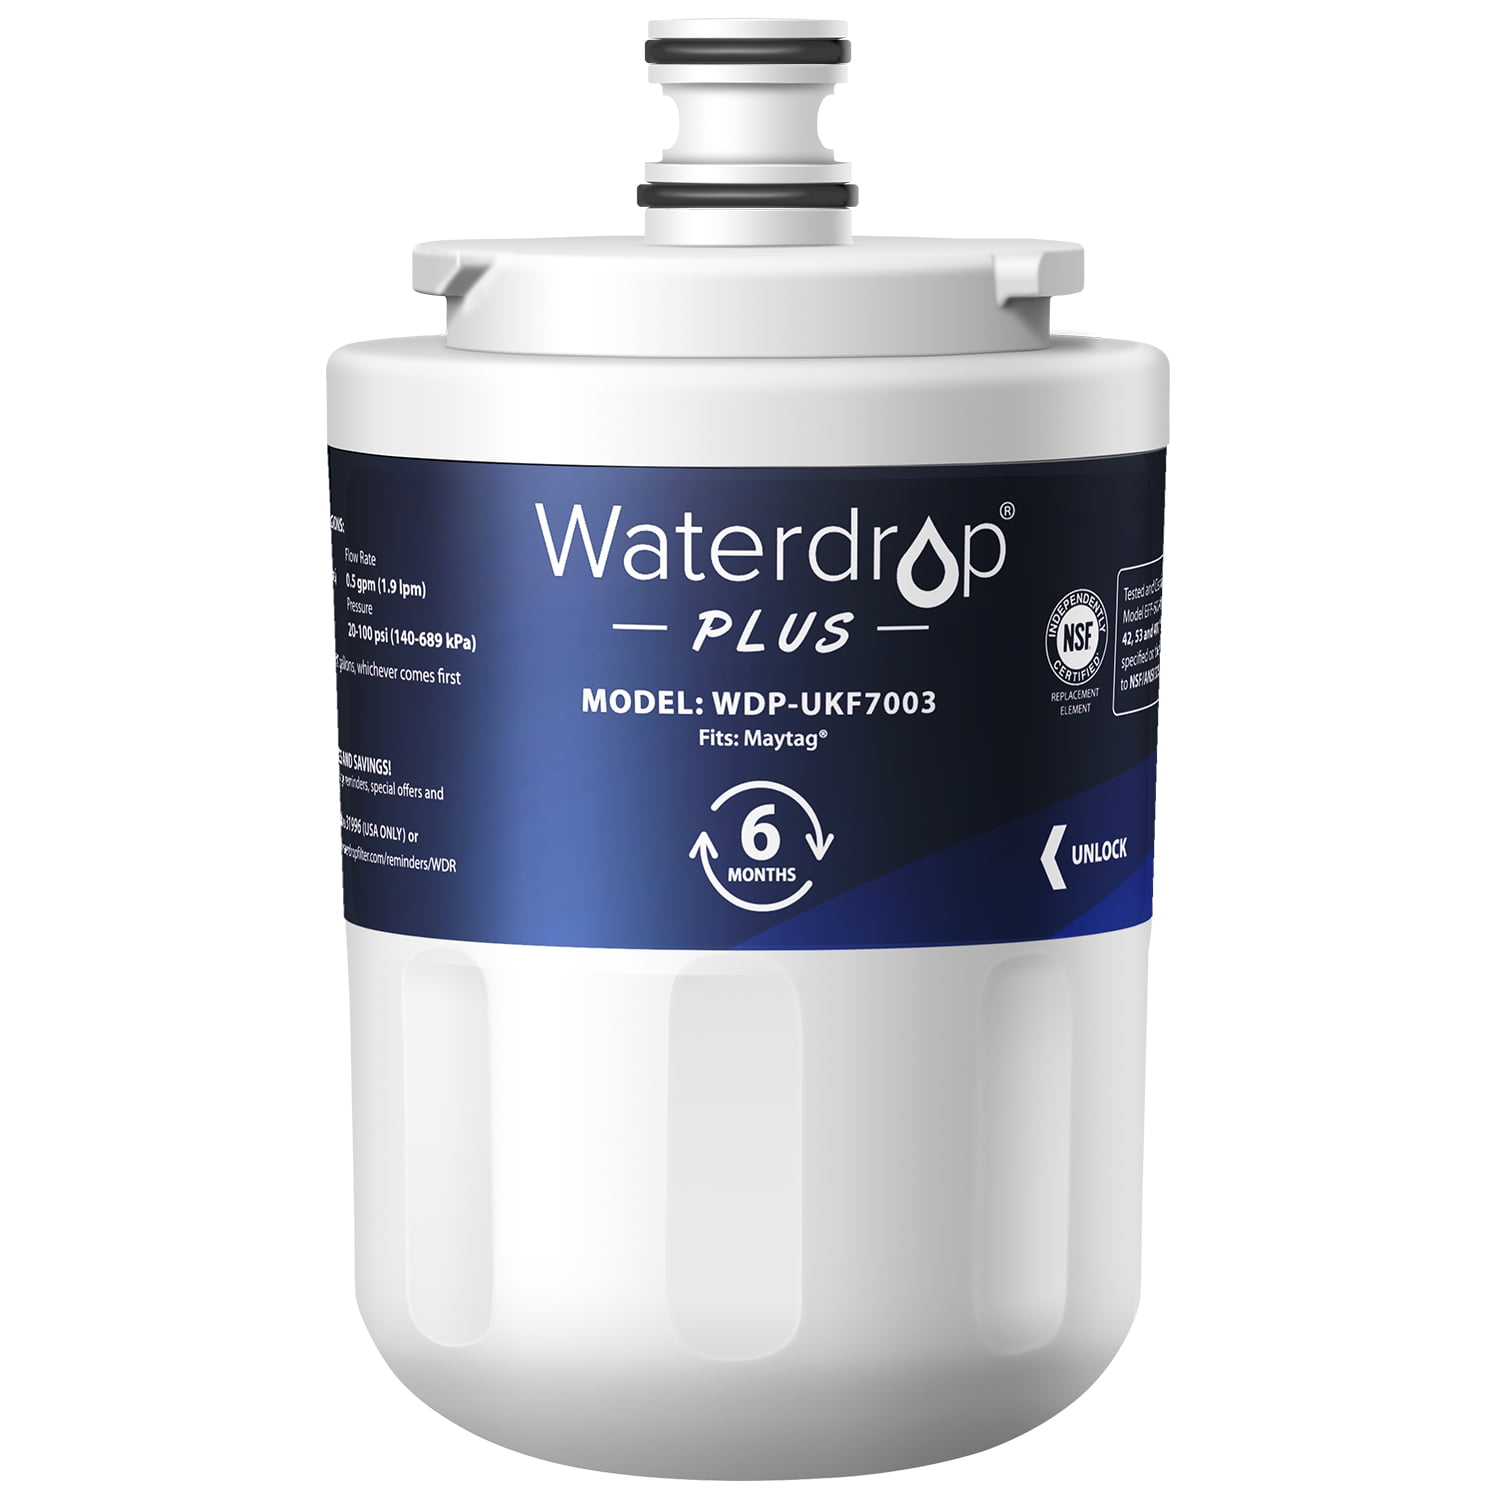 Waterdrop Plus UKF7003 Fridge Water Filter Replacement for Maytag 